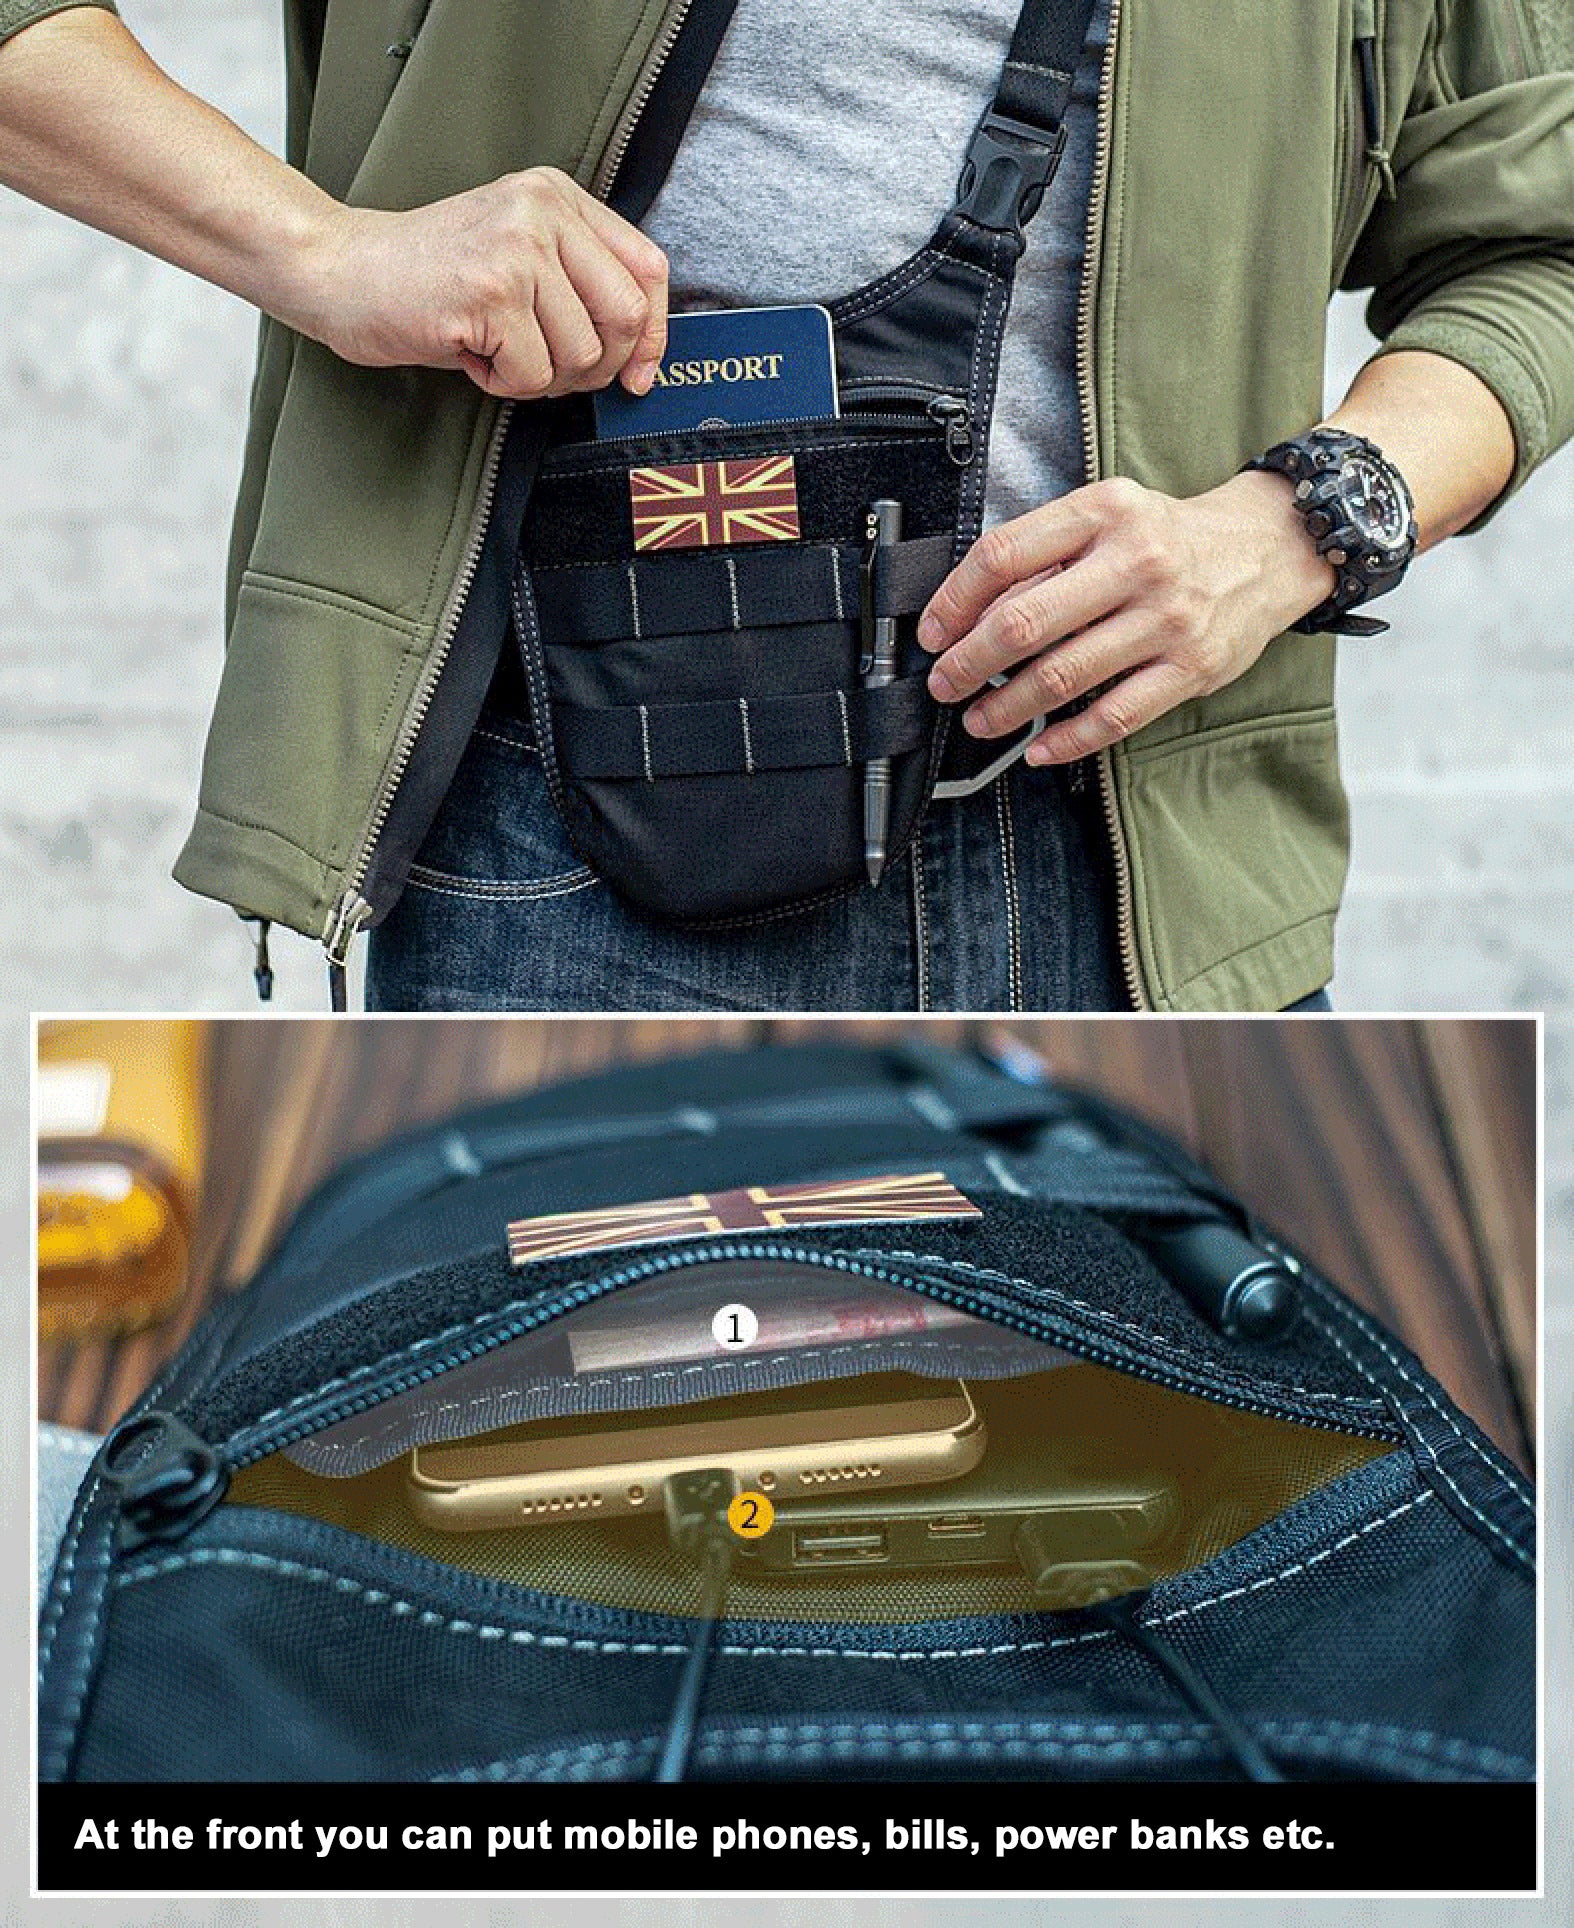 VADOO Sling Bag - Anti-theft Crossbody Shoulder Bag for Men and Women